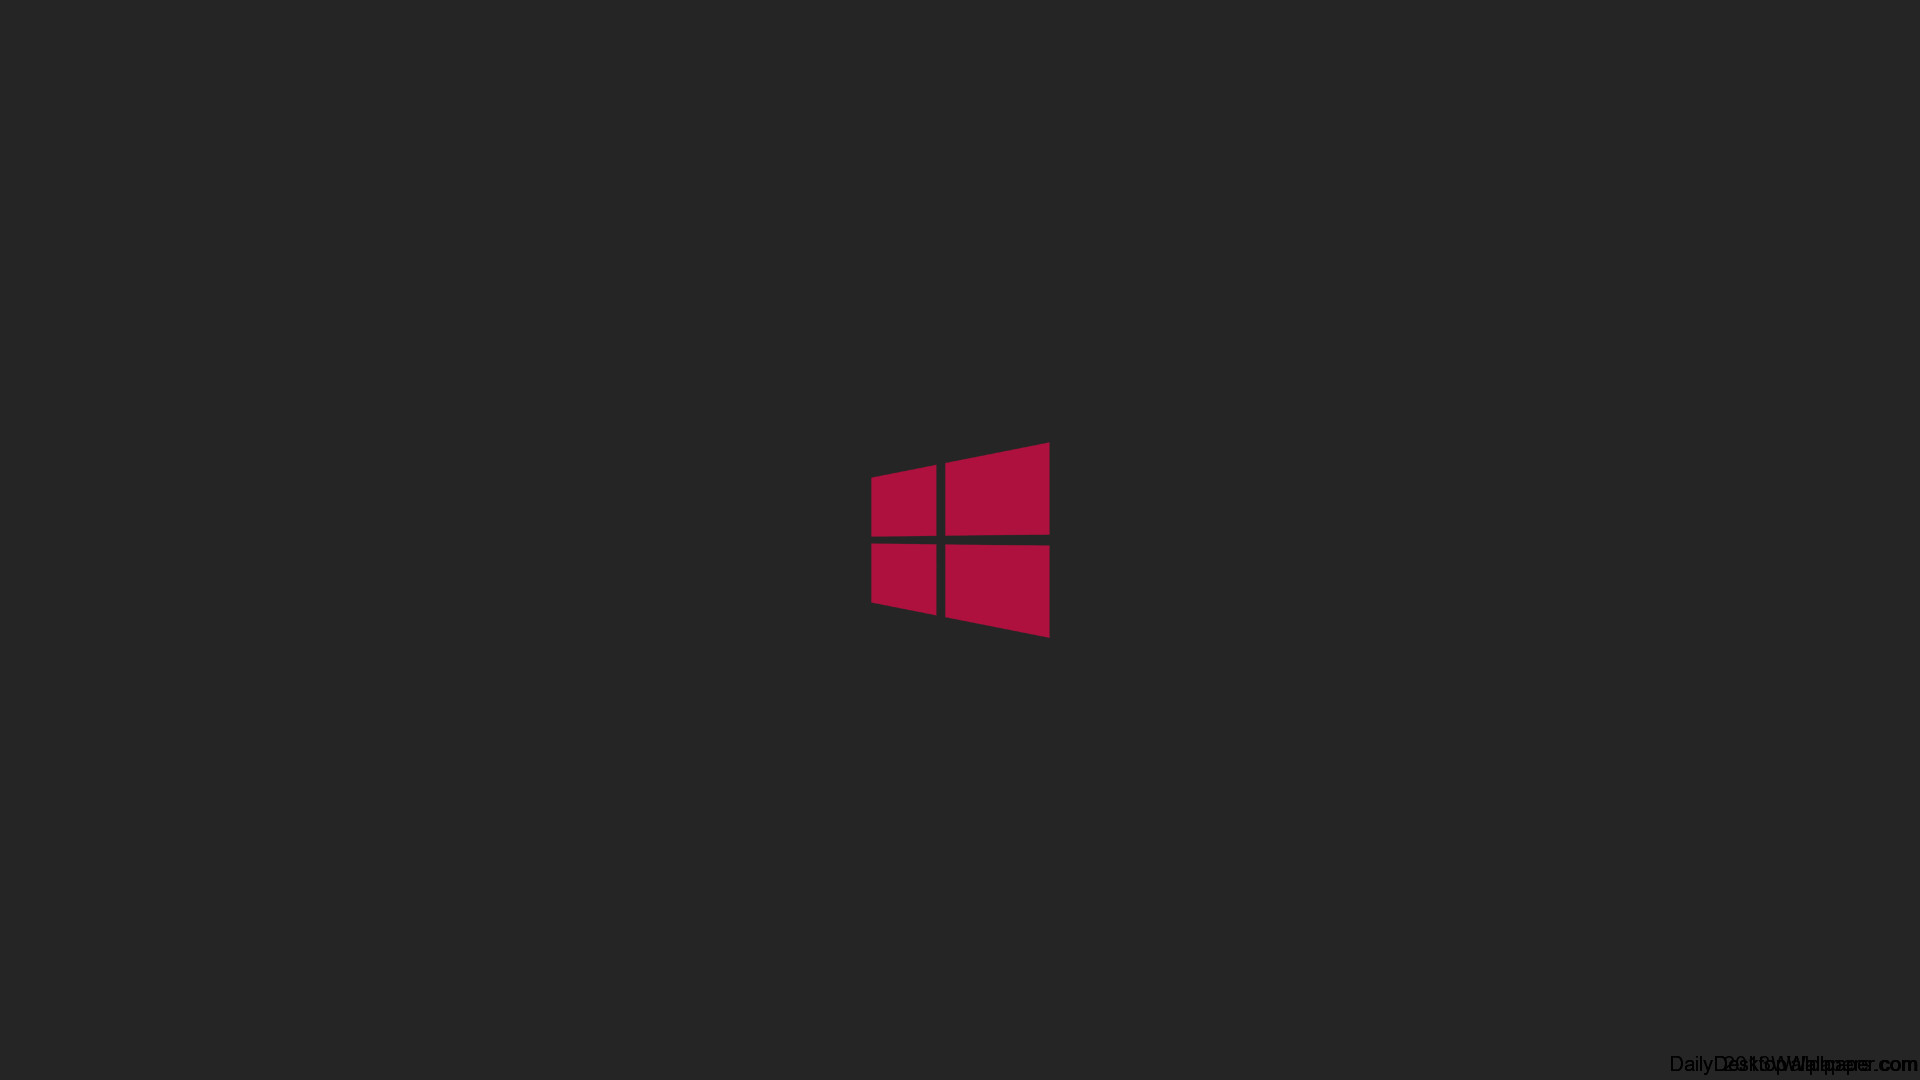 1920x1080 Windows 8 Logo Wallpapers - HD Wallpapers Inn